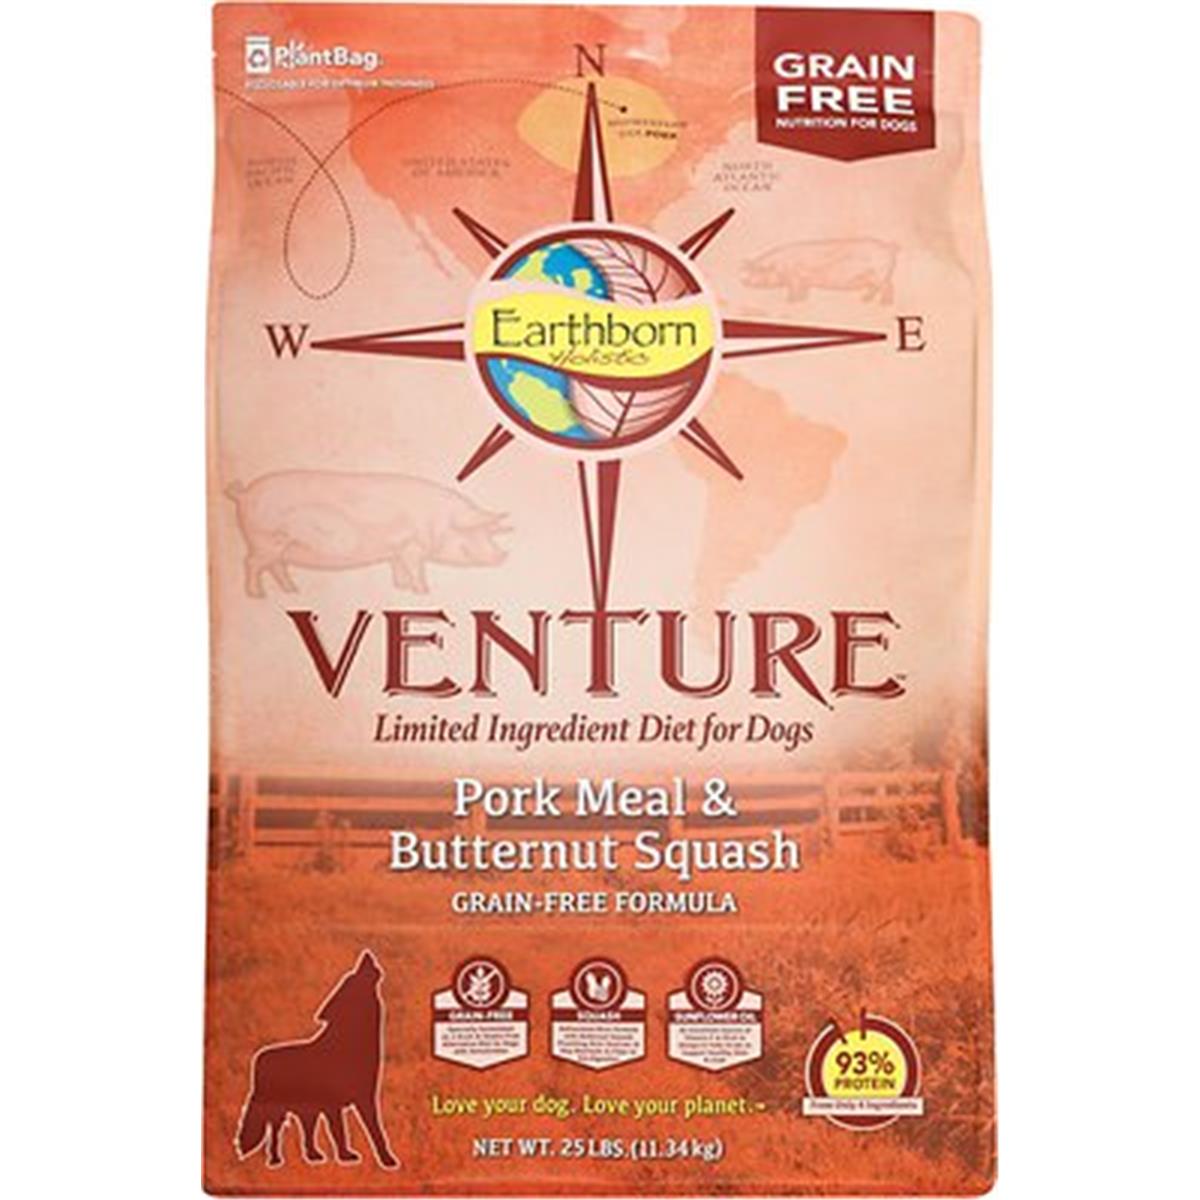 Pf57020 Venture Pork Meal & Butternut Squash Grain-free Dry Dog Food - 25 Lbs